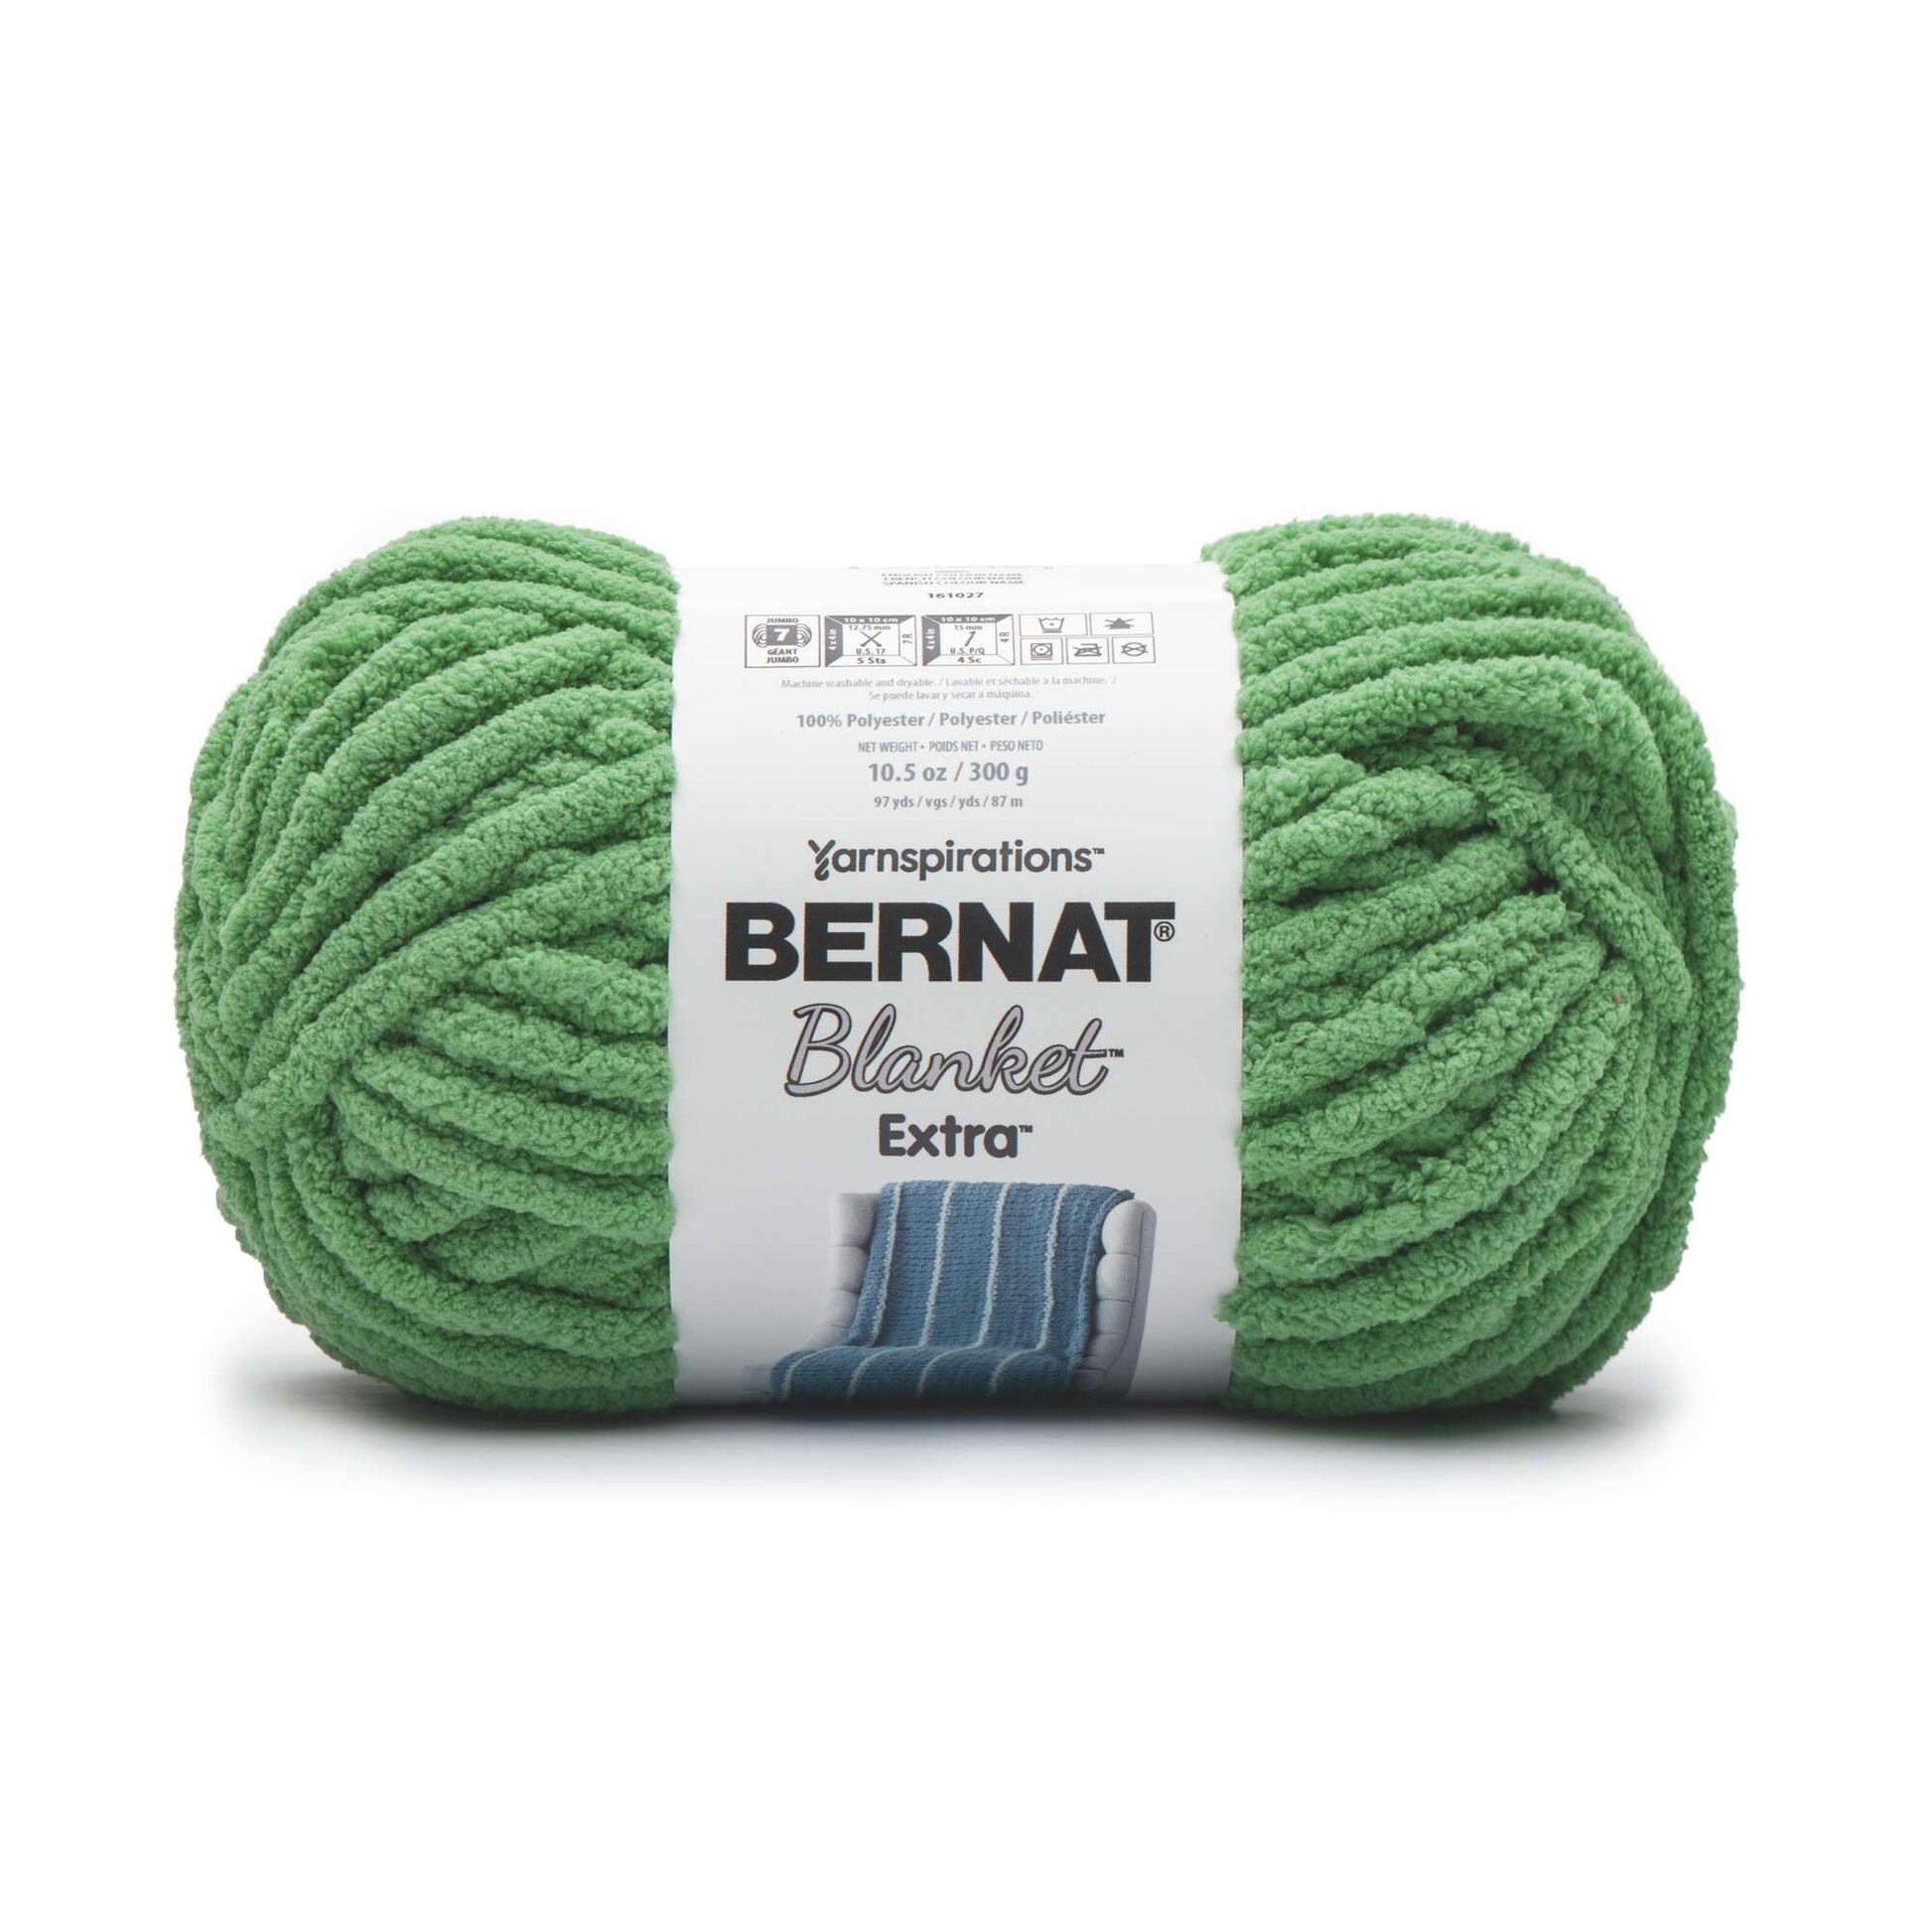 Bernat Blanket Big Ball Yarn-Olive, 1 count - Harris Teeter